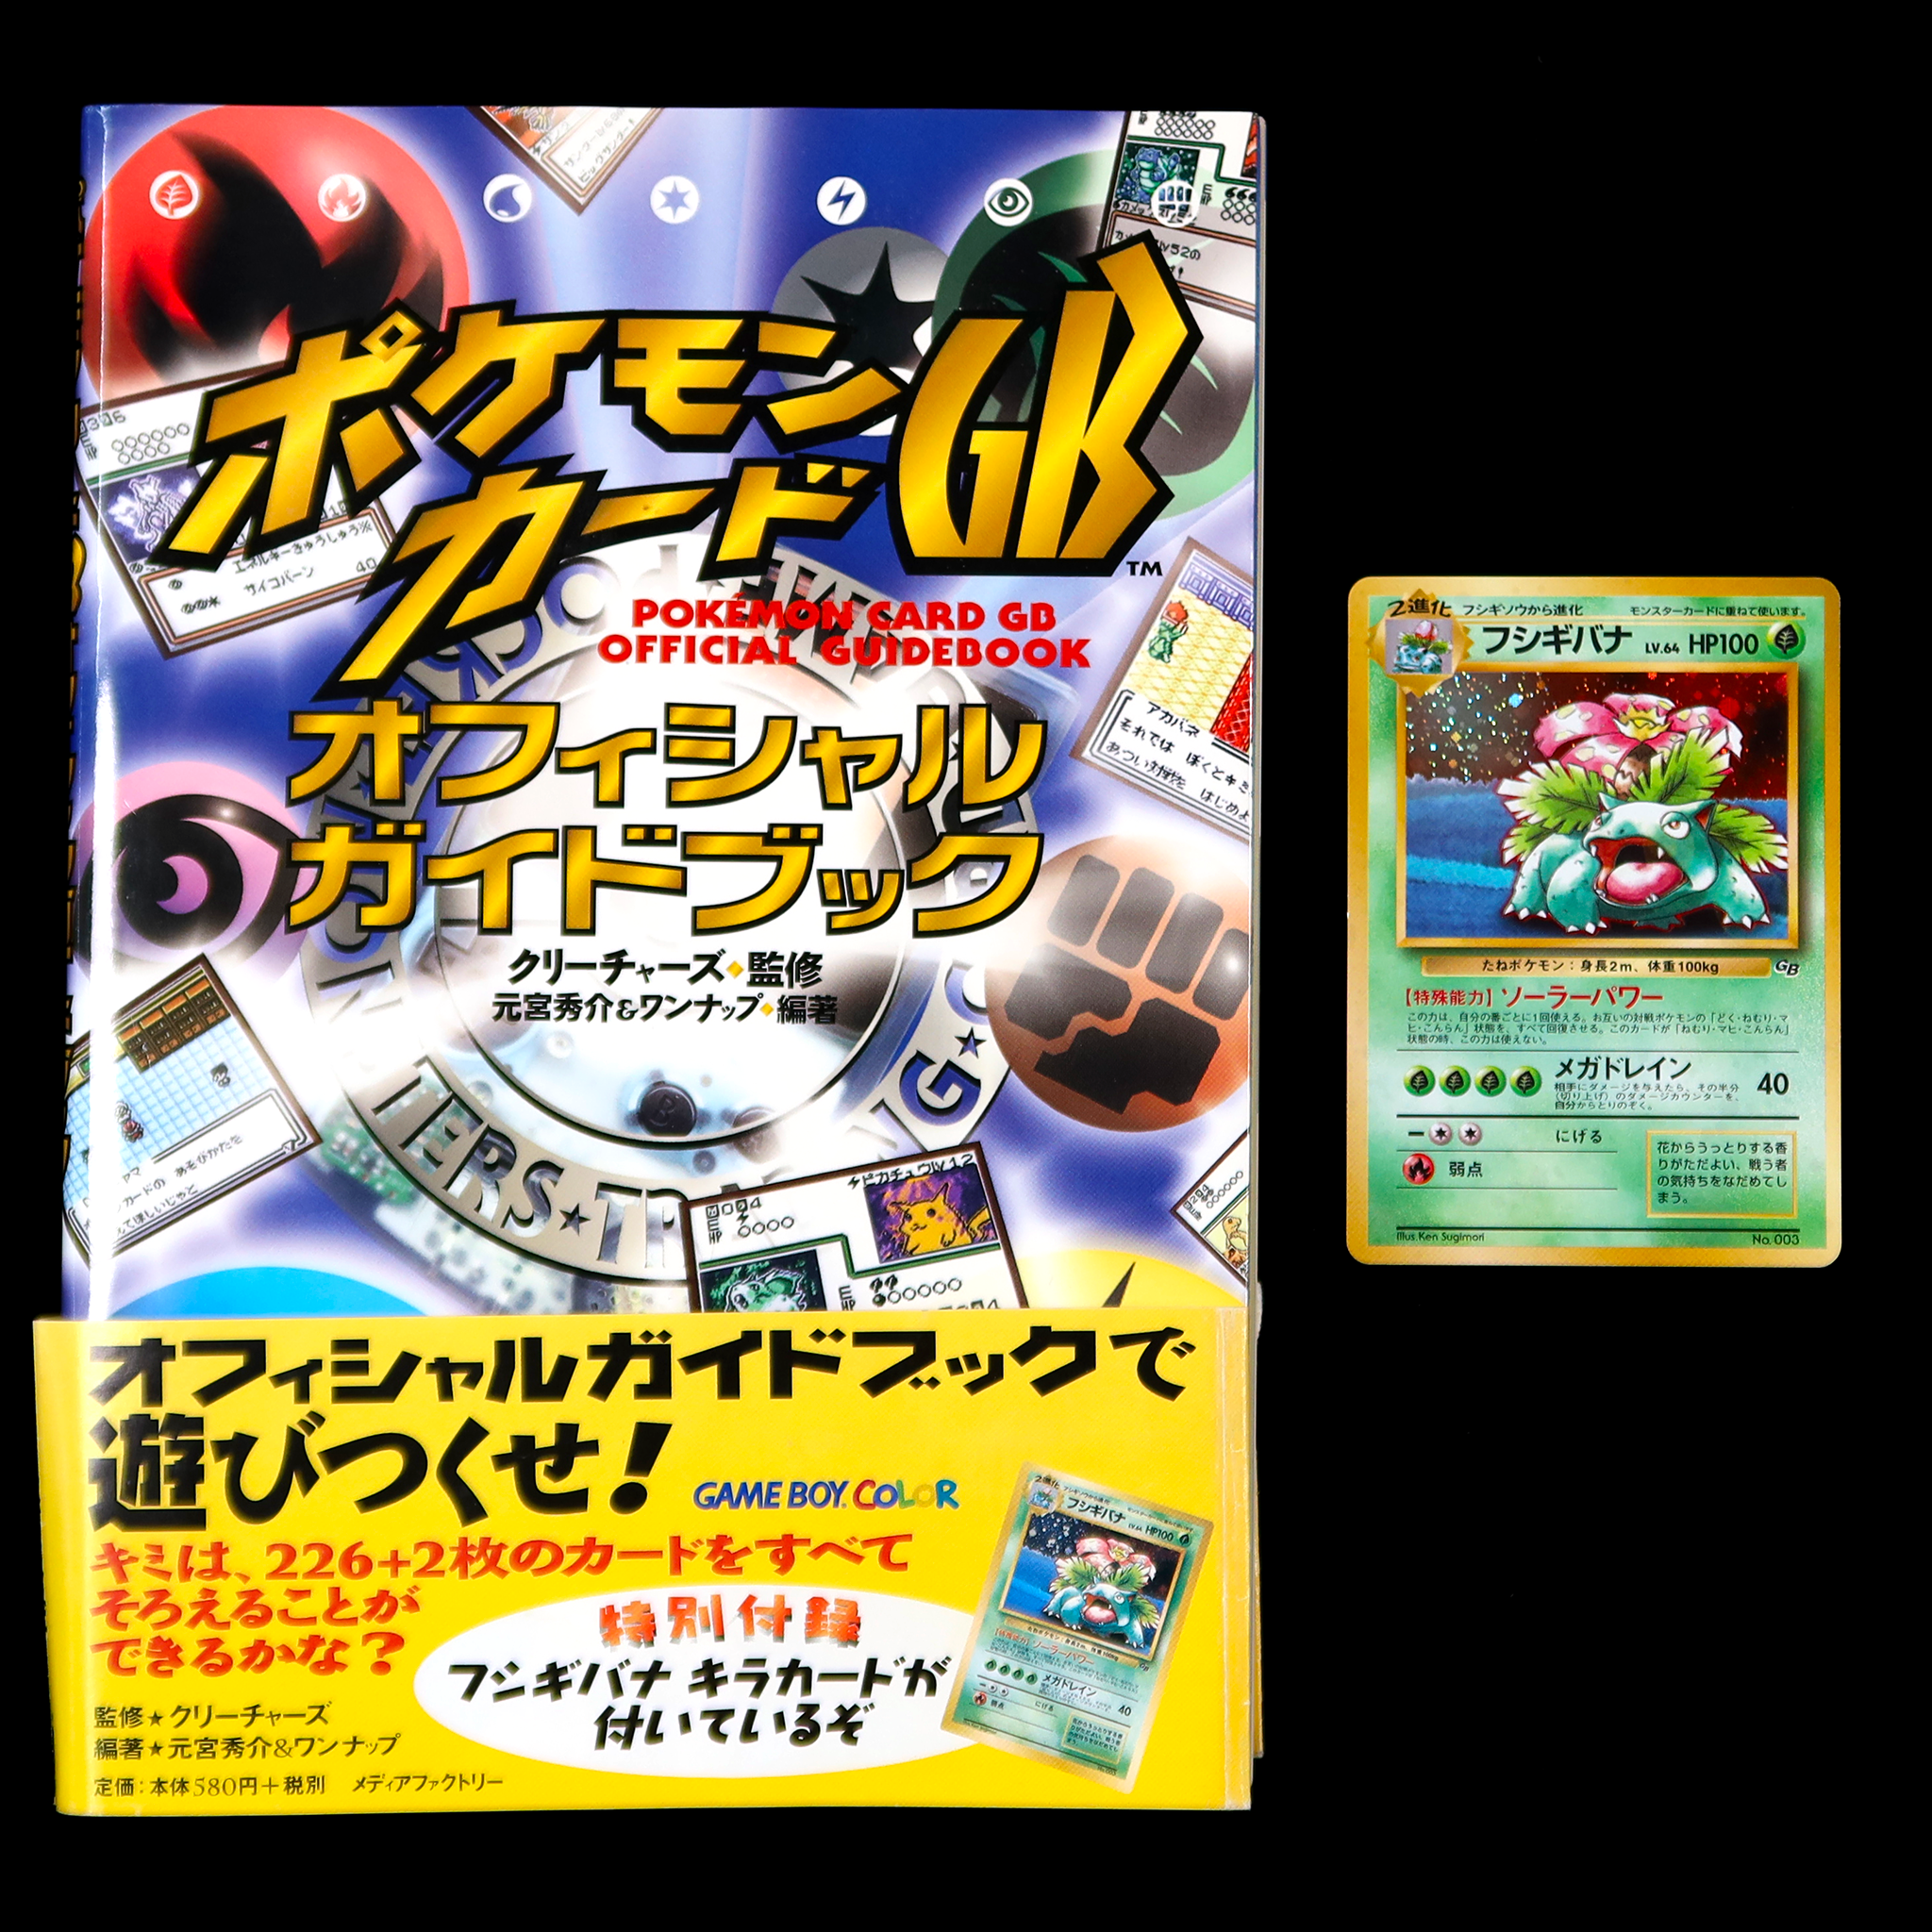 Pokémon Card GB Official Guide Book & Pokémon Card Game Venusaur